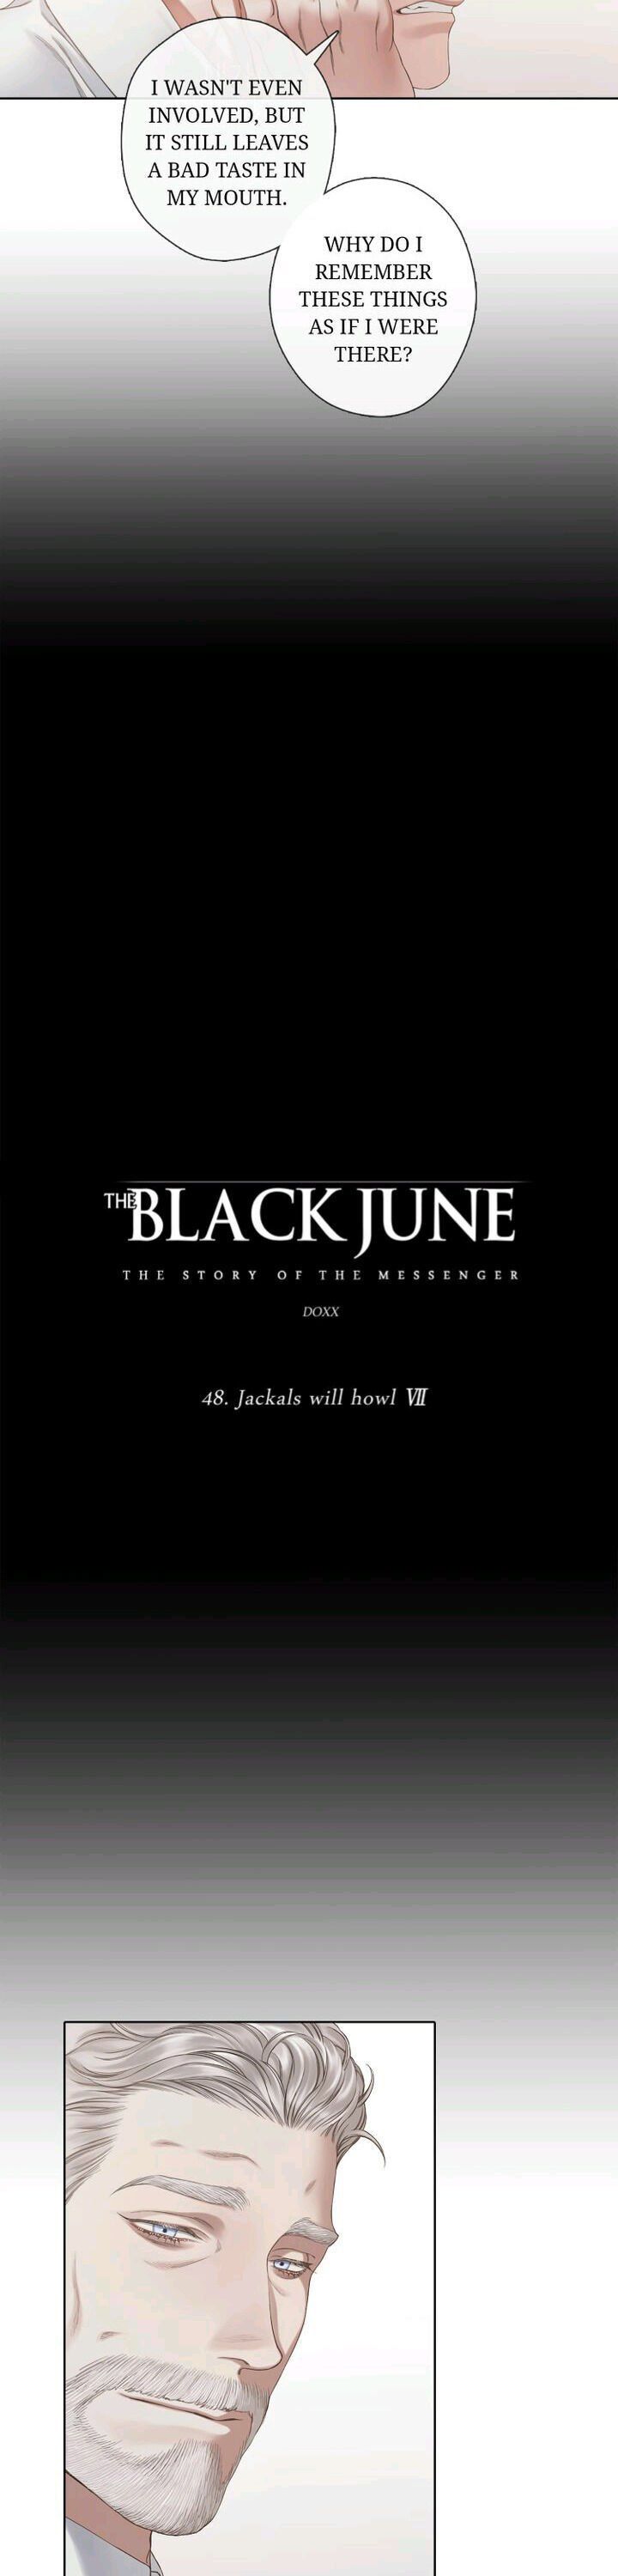 The Black June 48 4